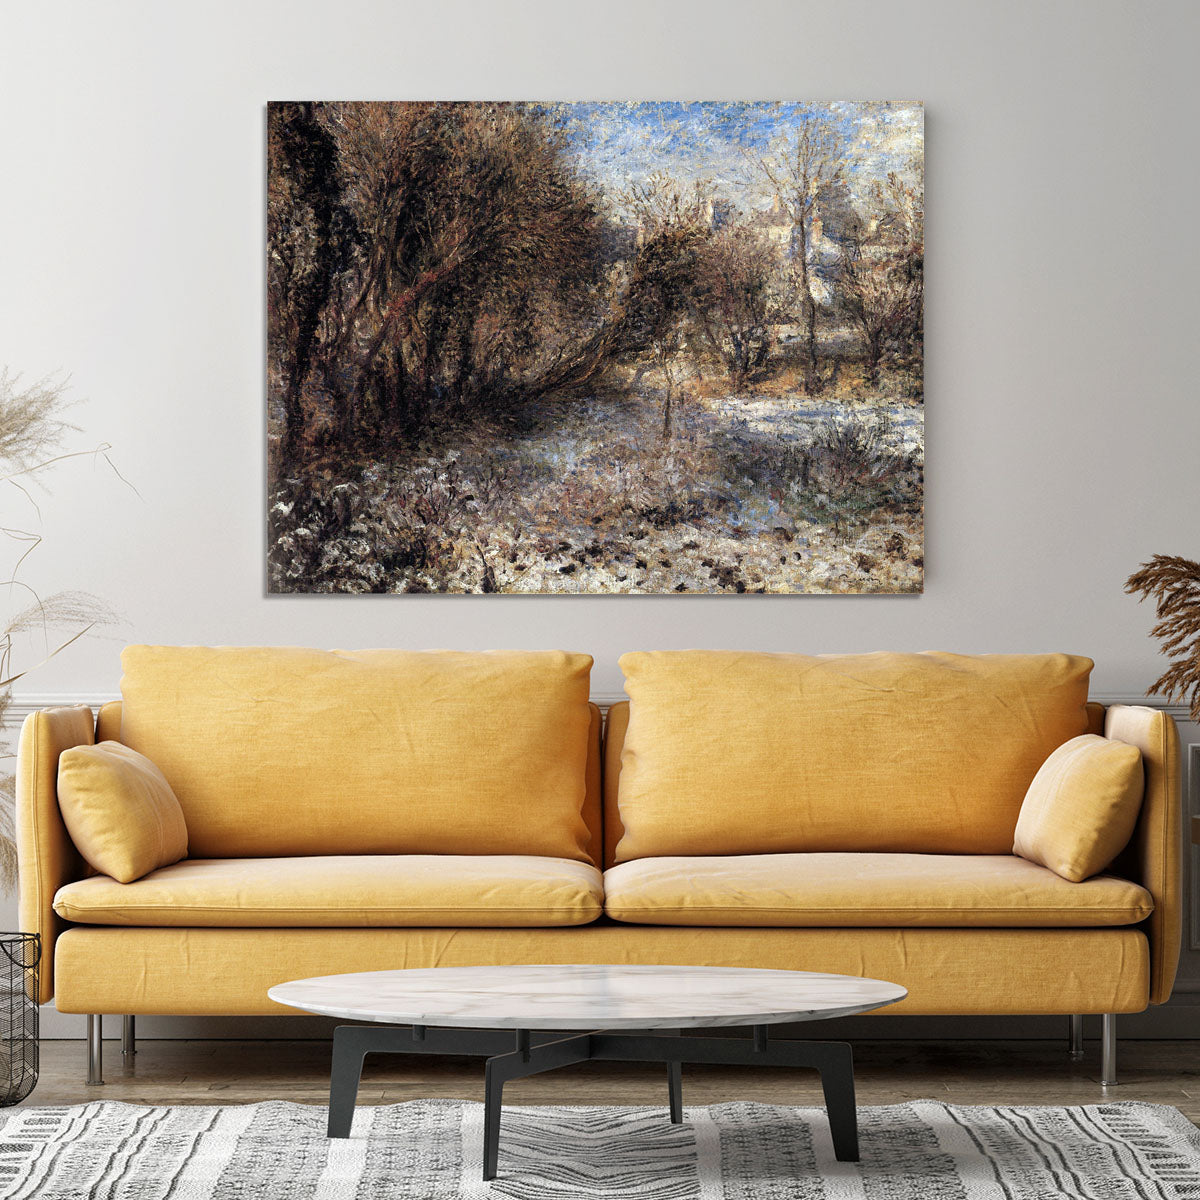 Snowy landscape by Renoir Canvas Print or Poster - Canvas Art Rocks - 4